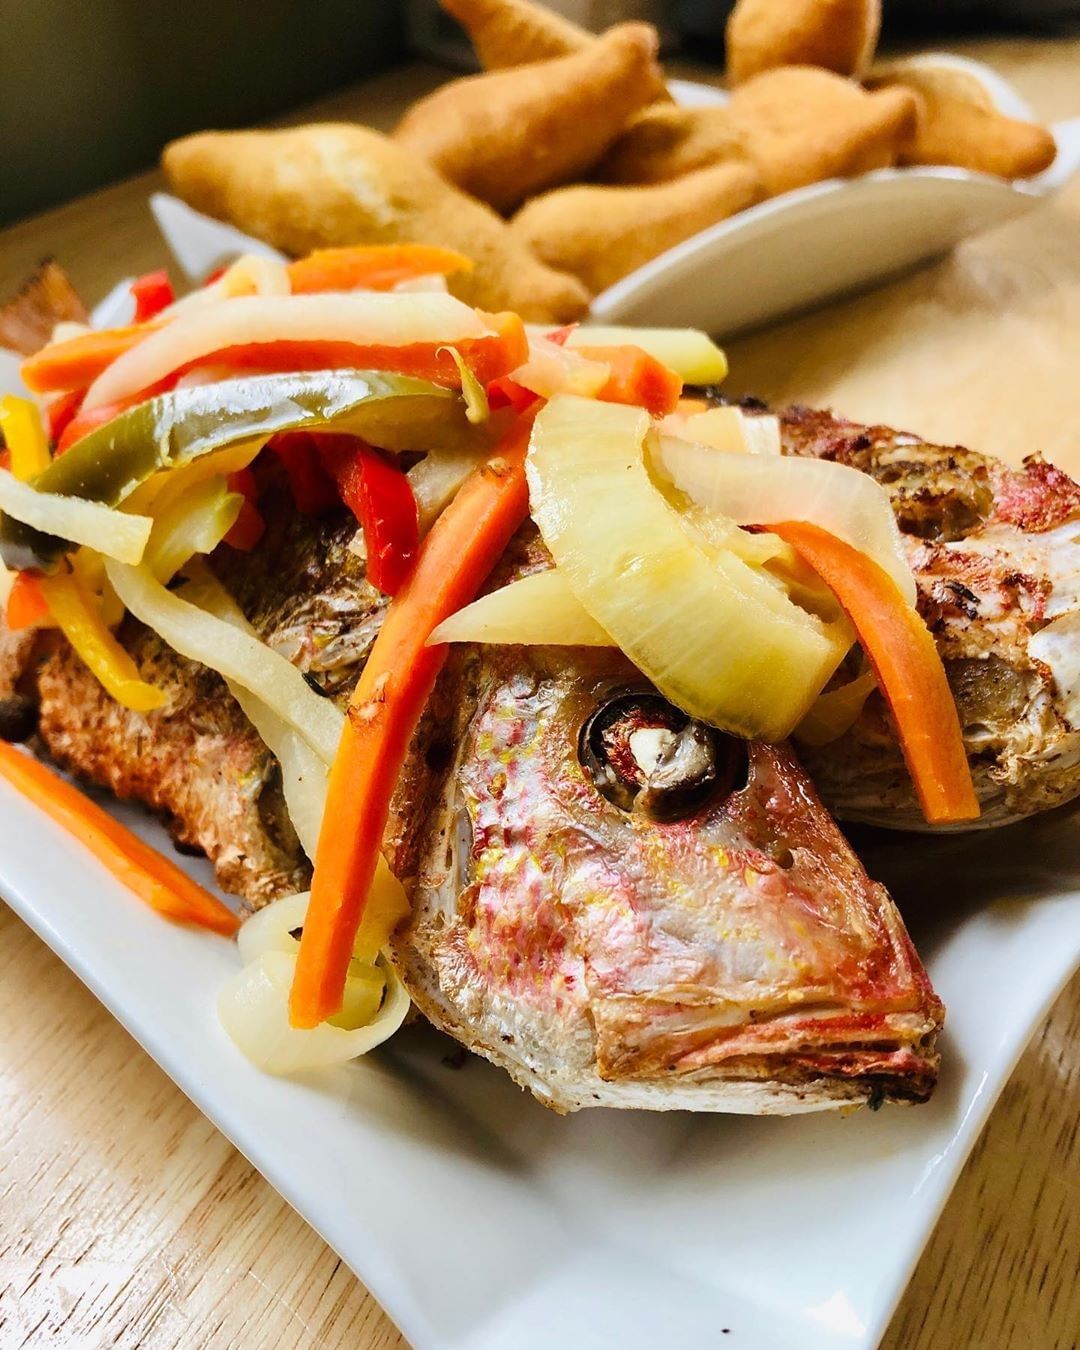 Jamaican Food Ranks in Top 20 Cuisines on Instagram; Number 1 in the